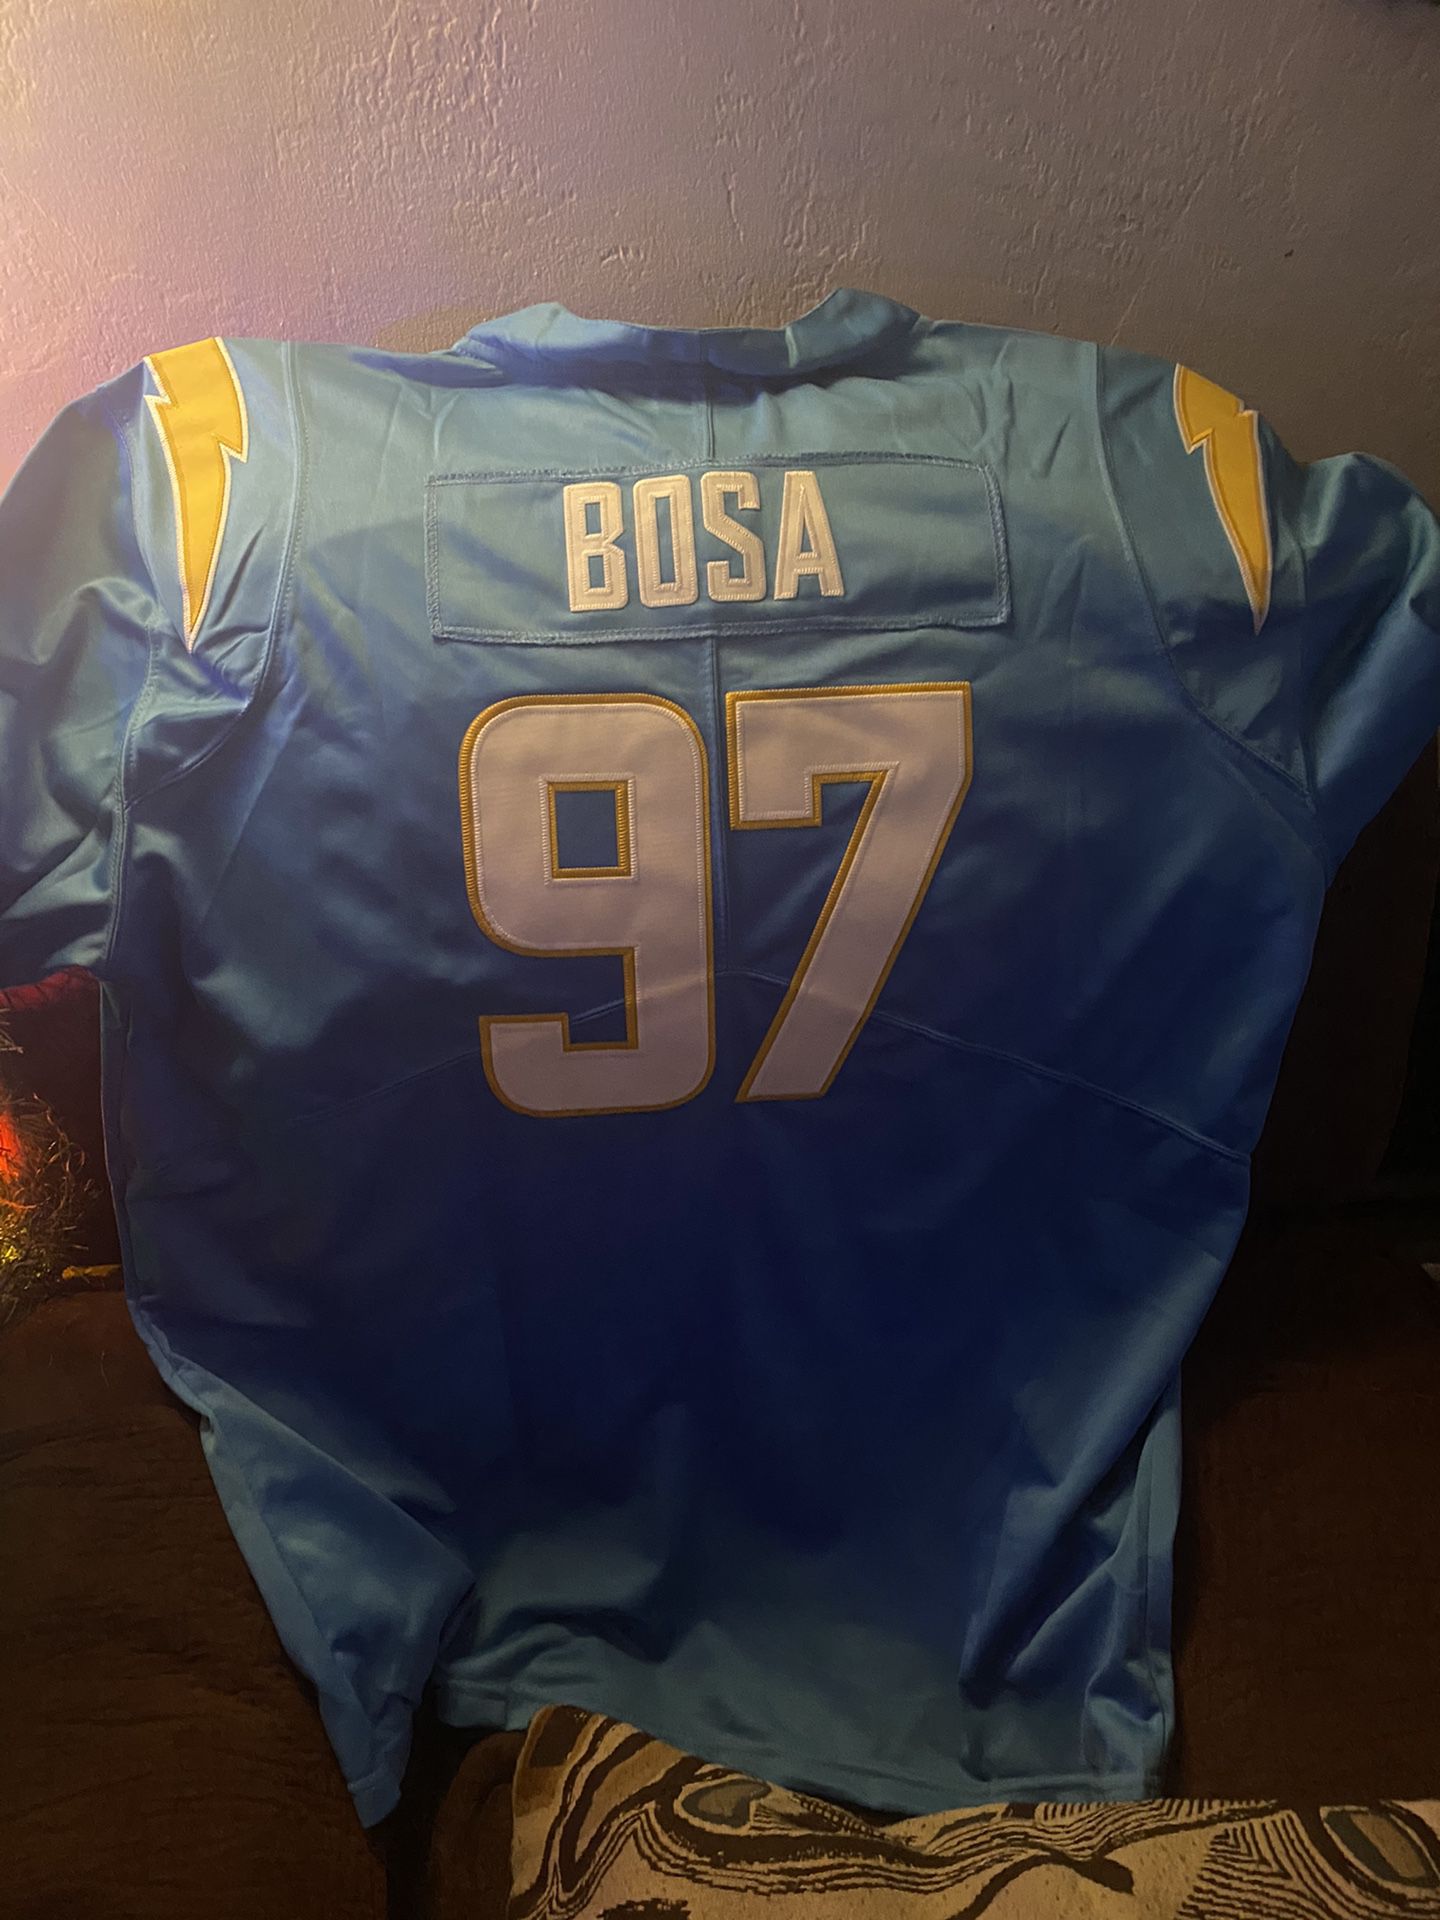 Joey Bosa Jersey for Sale in San Diego, CA - OfferUp